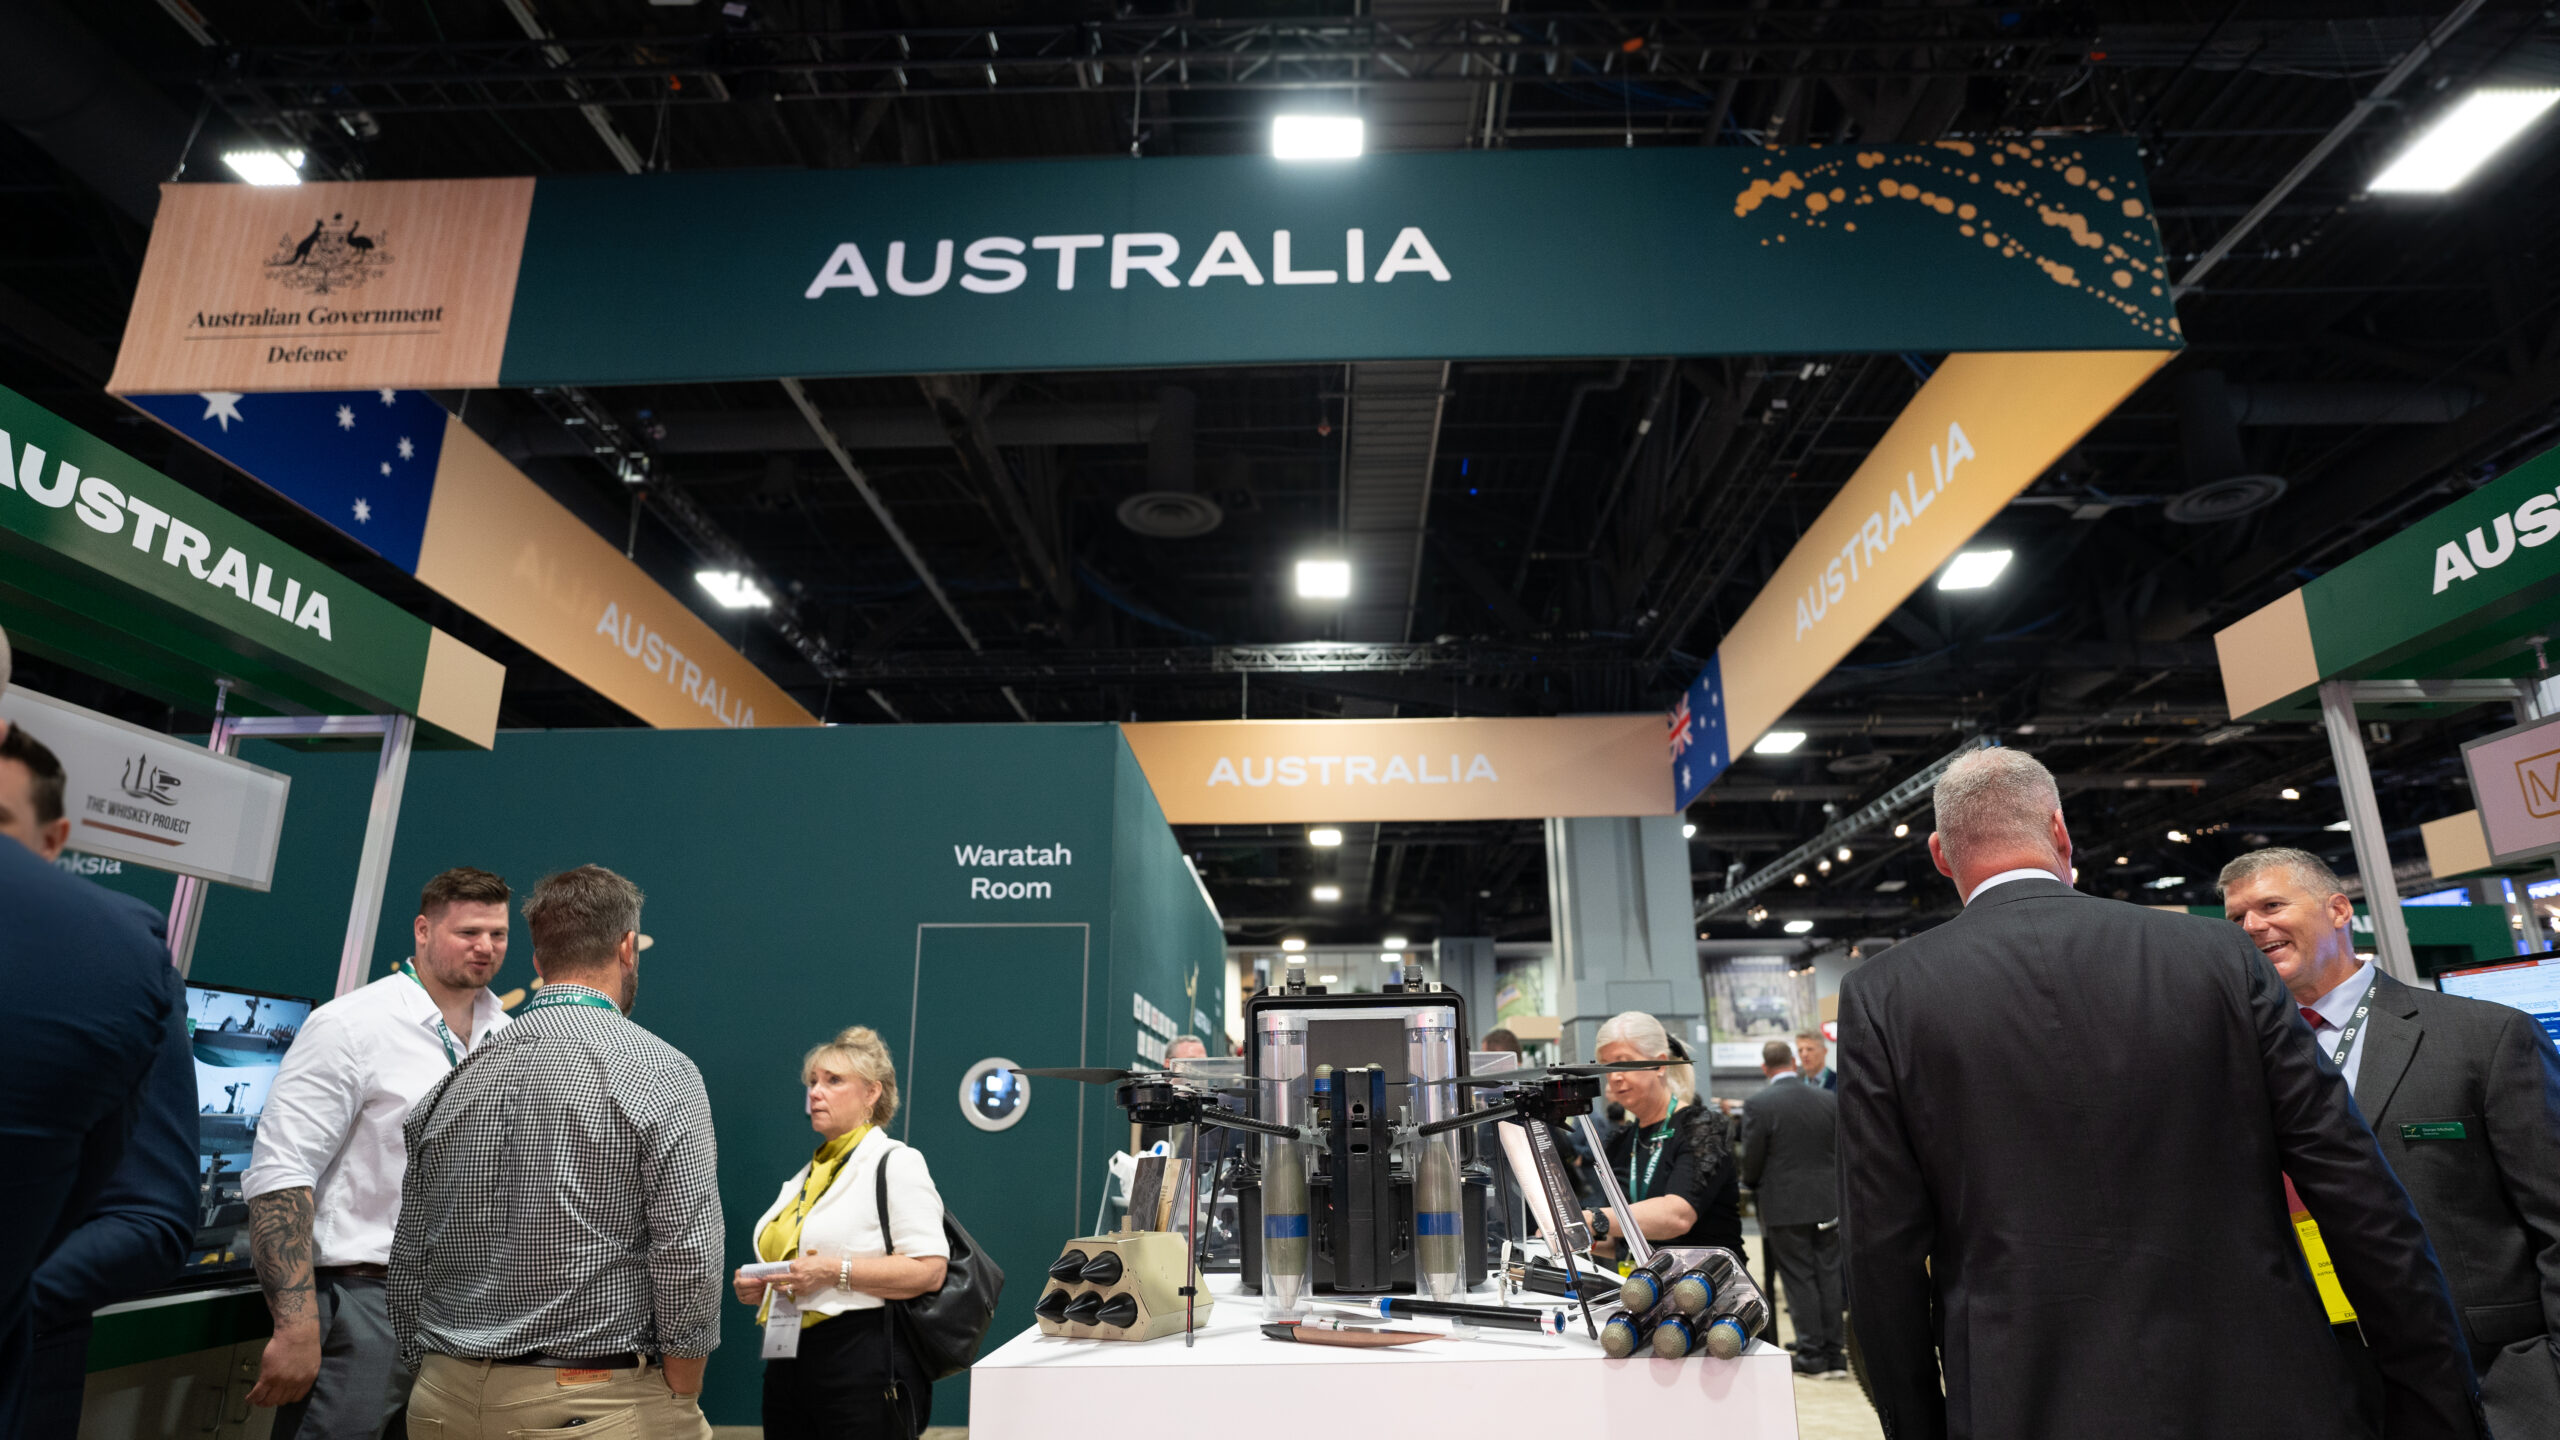 Australia International Booth